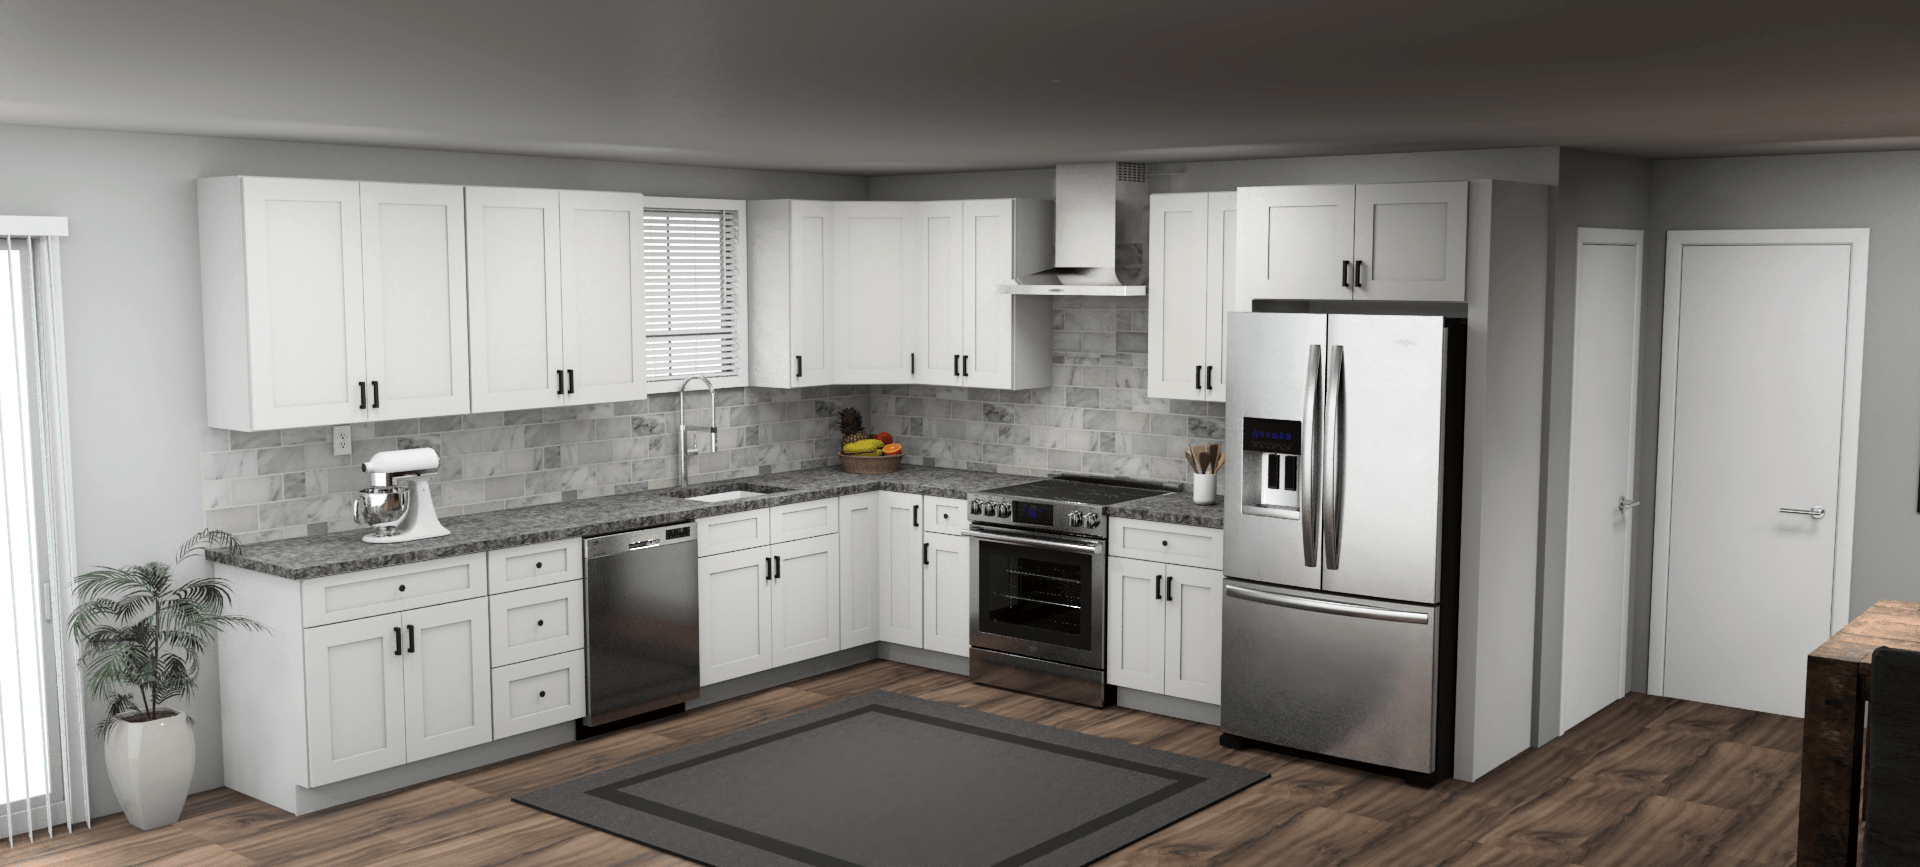 Fabuwood Allure Galaxy Frost 12 x 12 L Shaped Kitchen Main Layout Photo